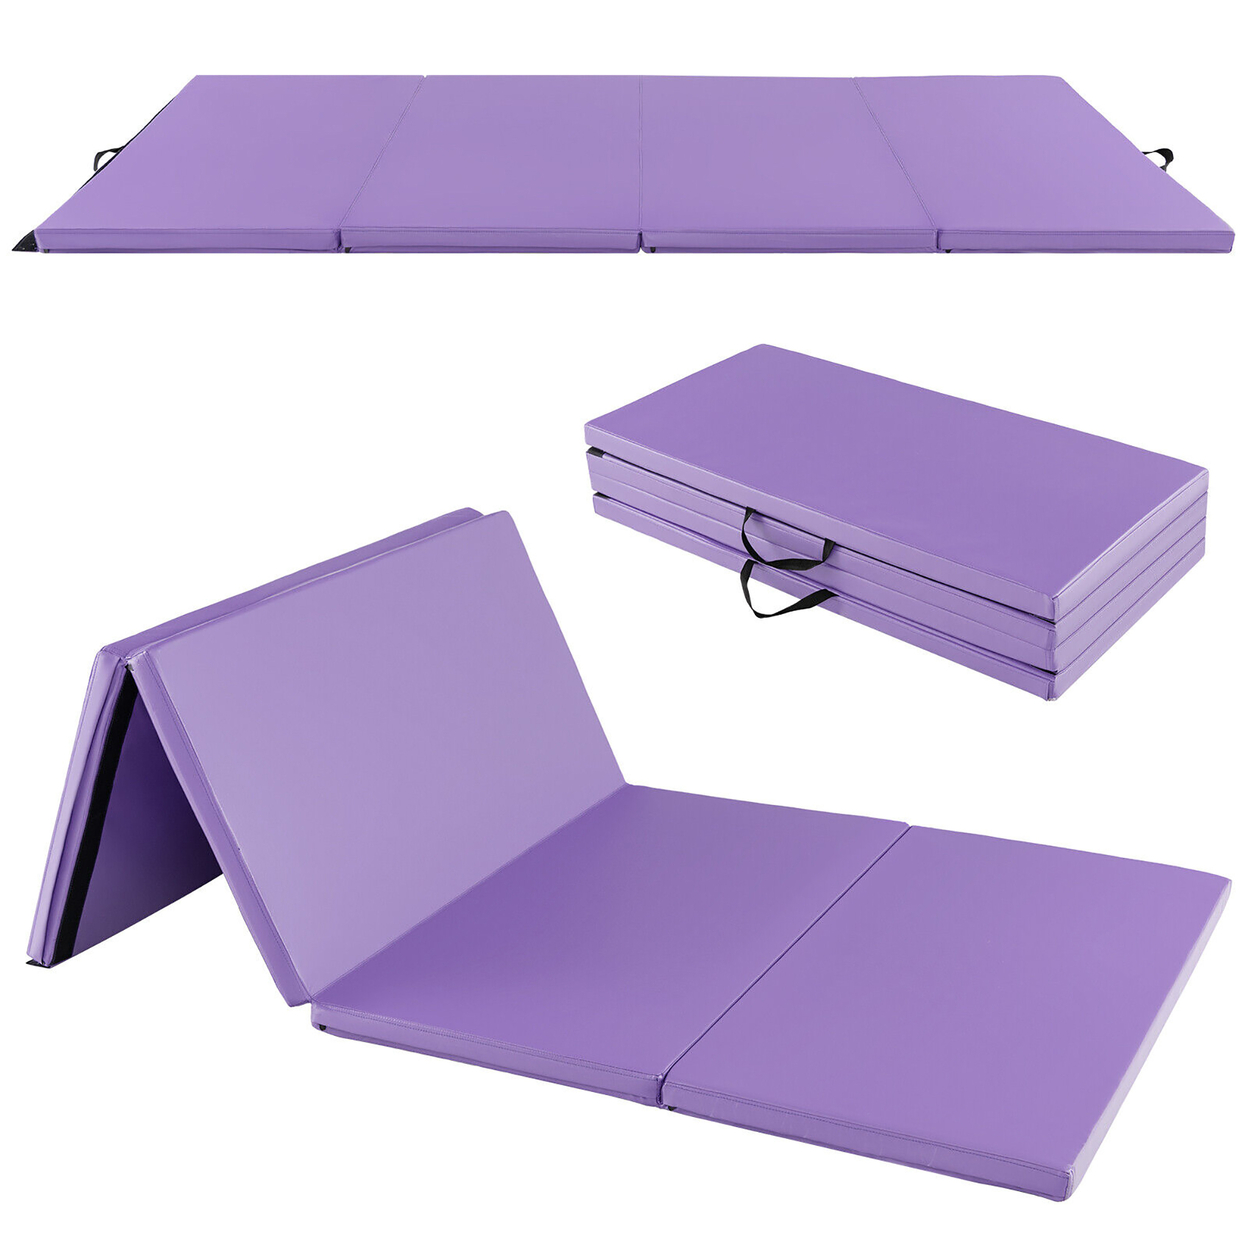 8' X 4' X 2'' Folding Gymnastics Mat Tumbling Exercise PU Leather Cover For Yoga